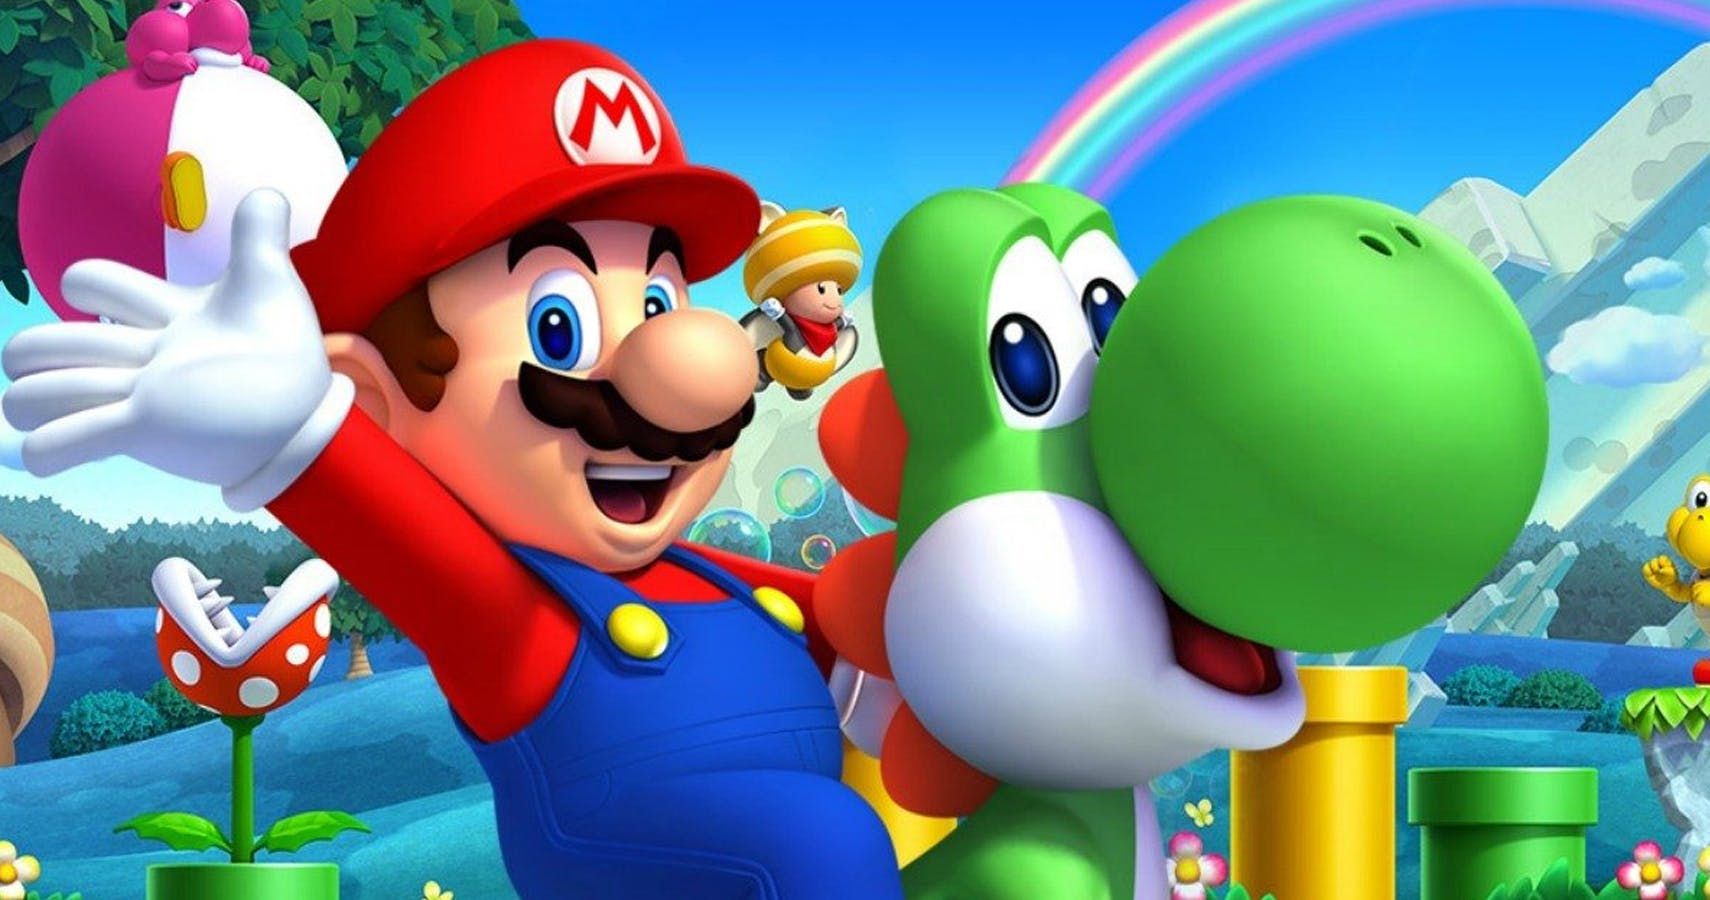 Mario new life. New super Mario Bros. Игра. Super Mario Bros 35 Nintendo Switch. Mario 1999. Марио (персонаж игр).